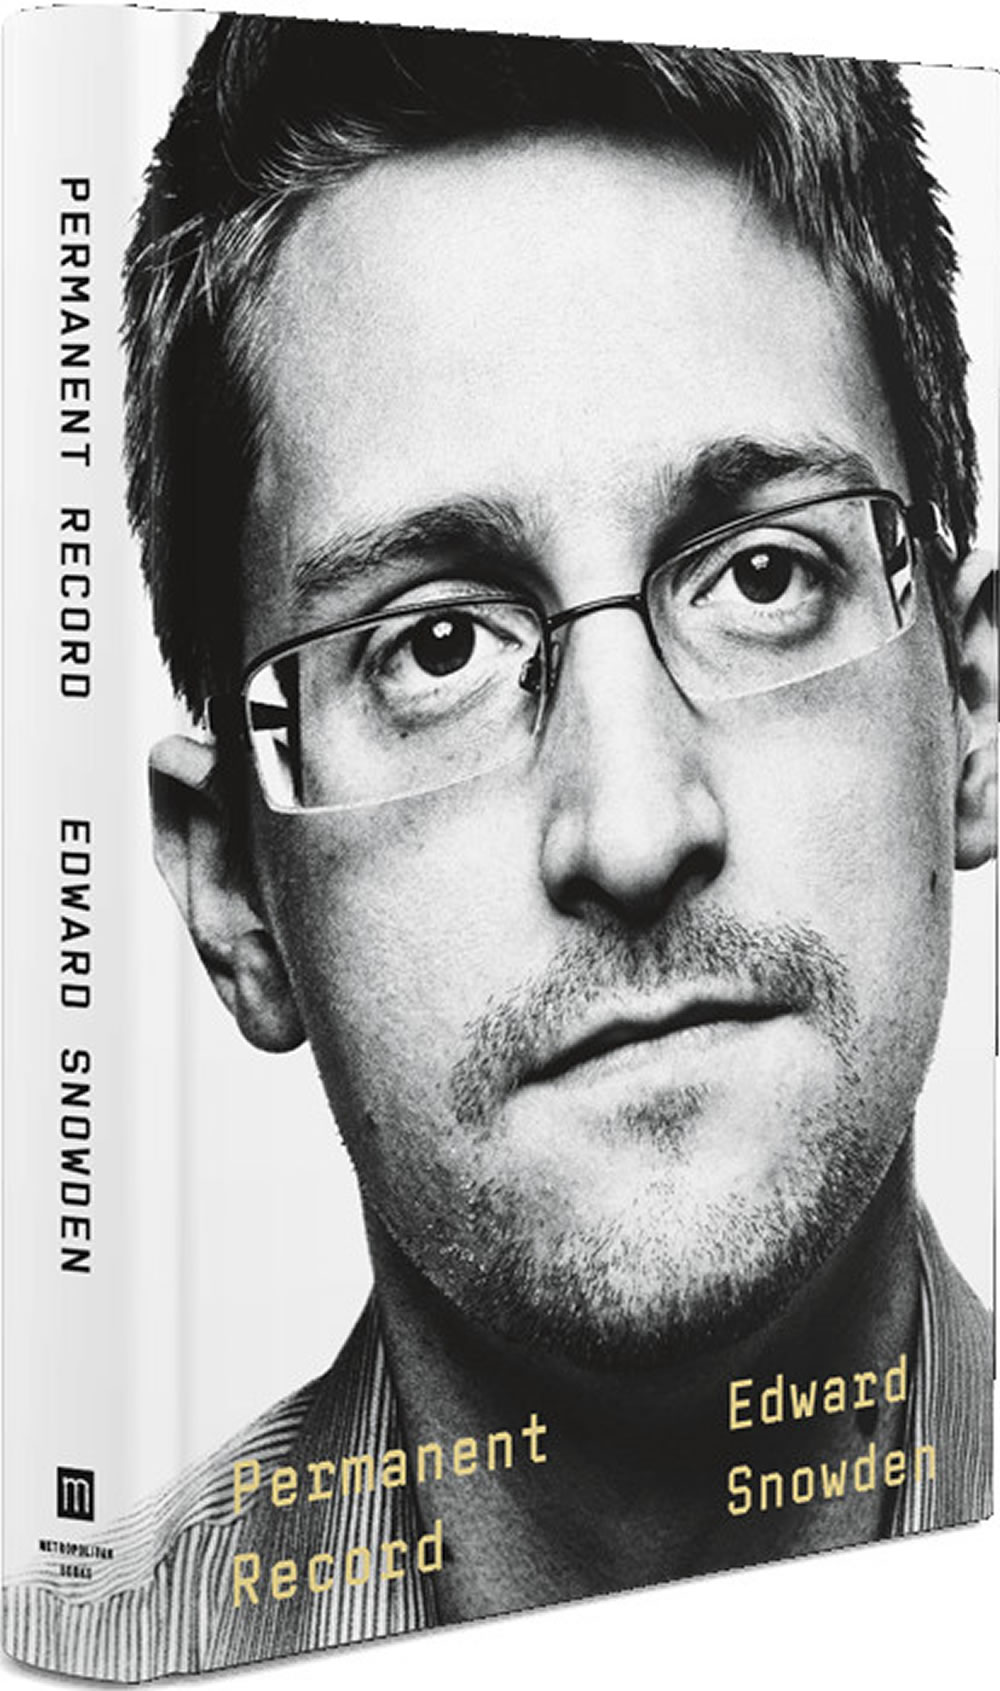 Edward Snowden acusa otra vez a la NSA  